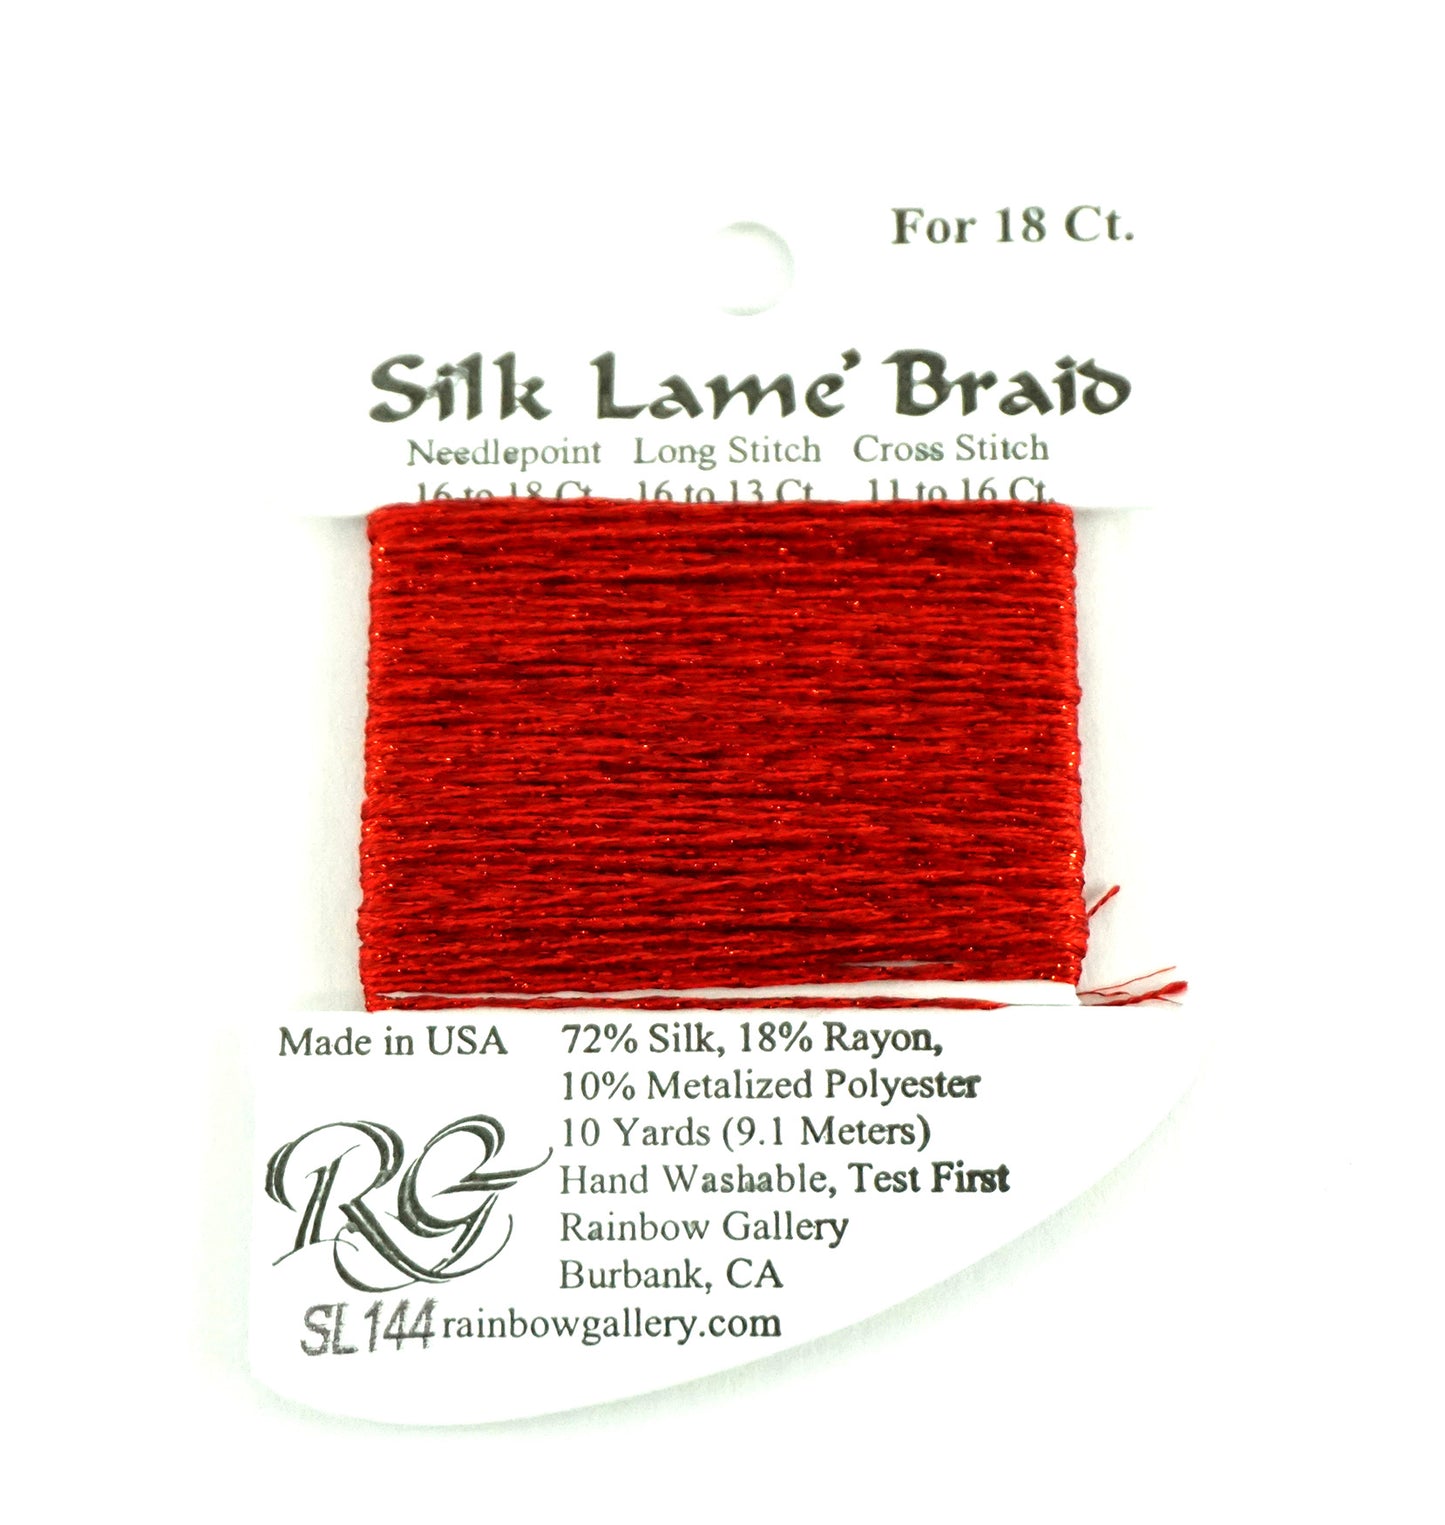 Silk Lame' Braid ~ Silk Lame' Braid #SL144 "Christmas Red" Silk Lame' Braid  10 Yd. Needlepoint Braid for 18 mesh  by Rainbow Gallery